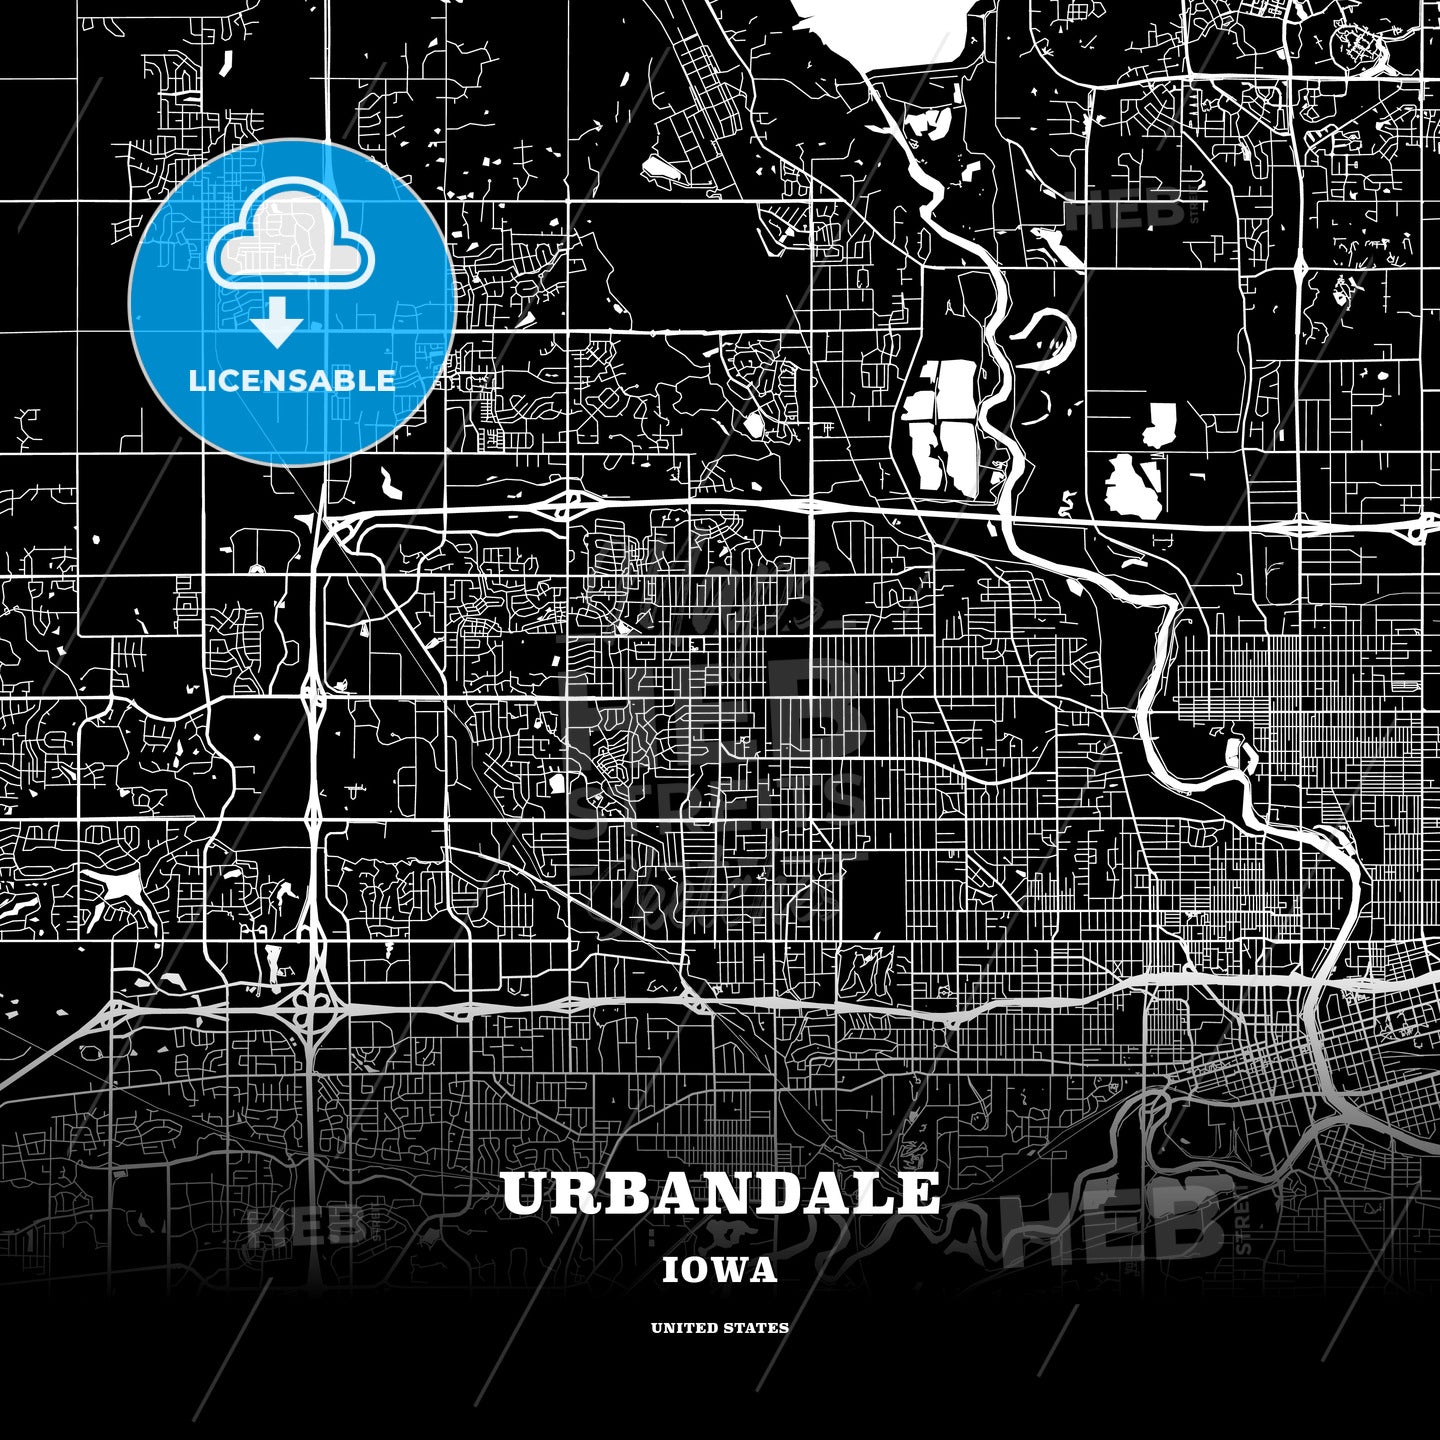 Urbandale, Iowa, USA map